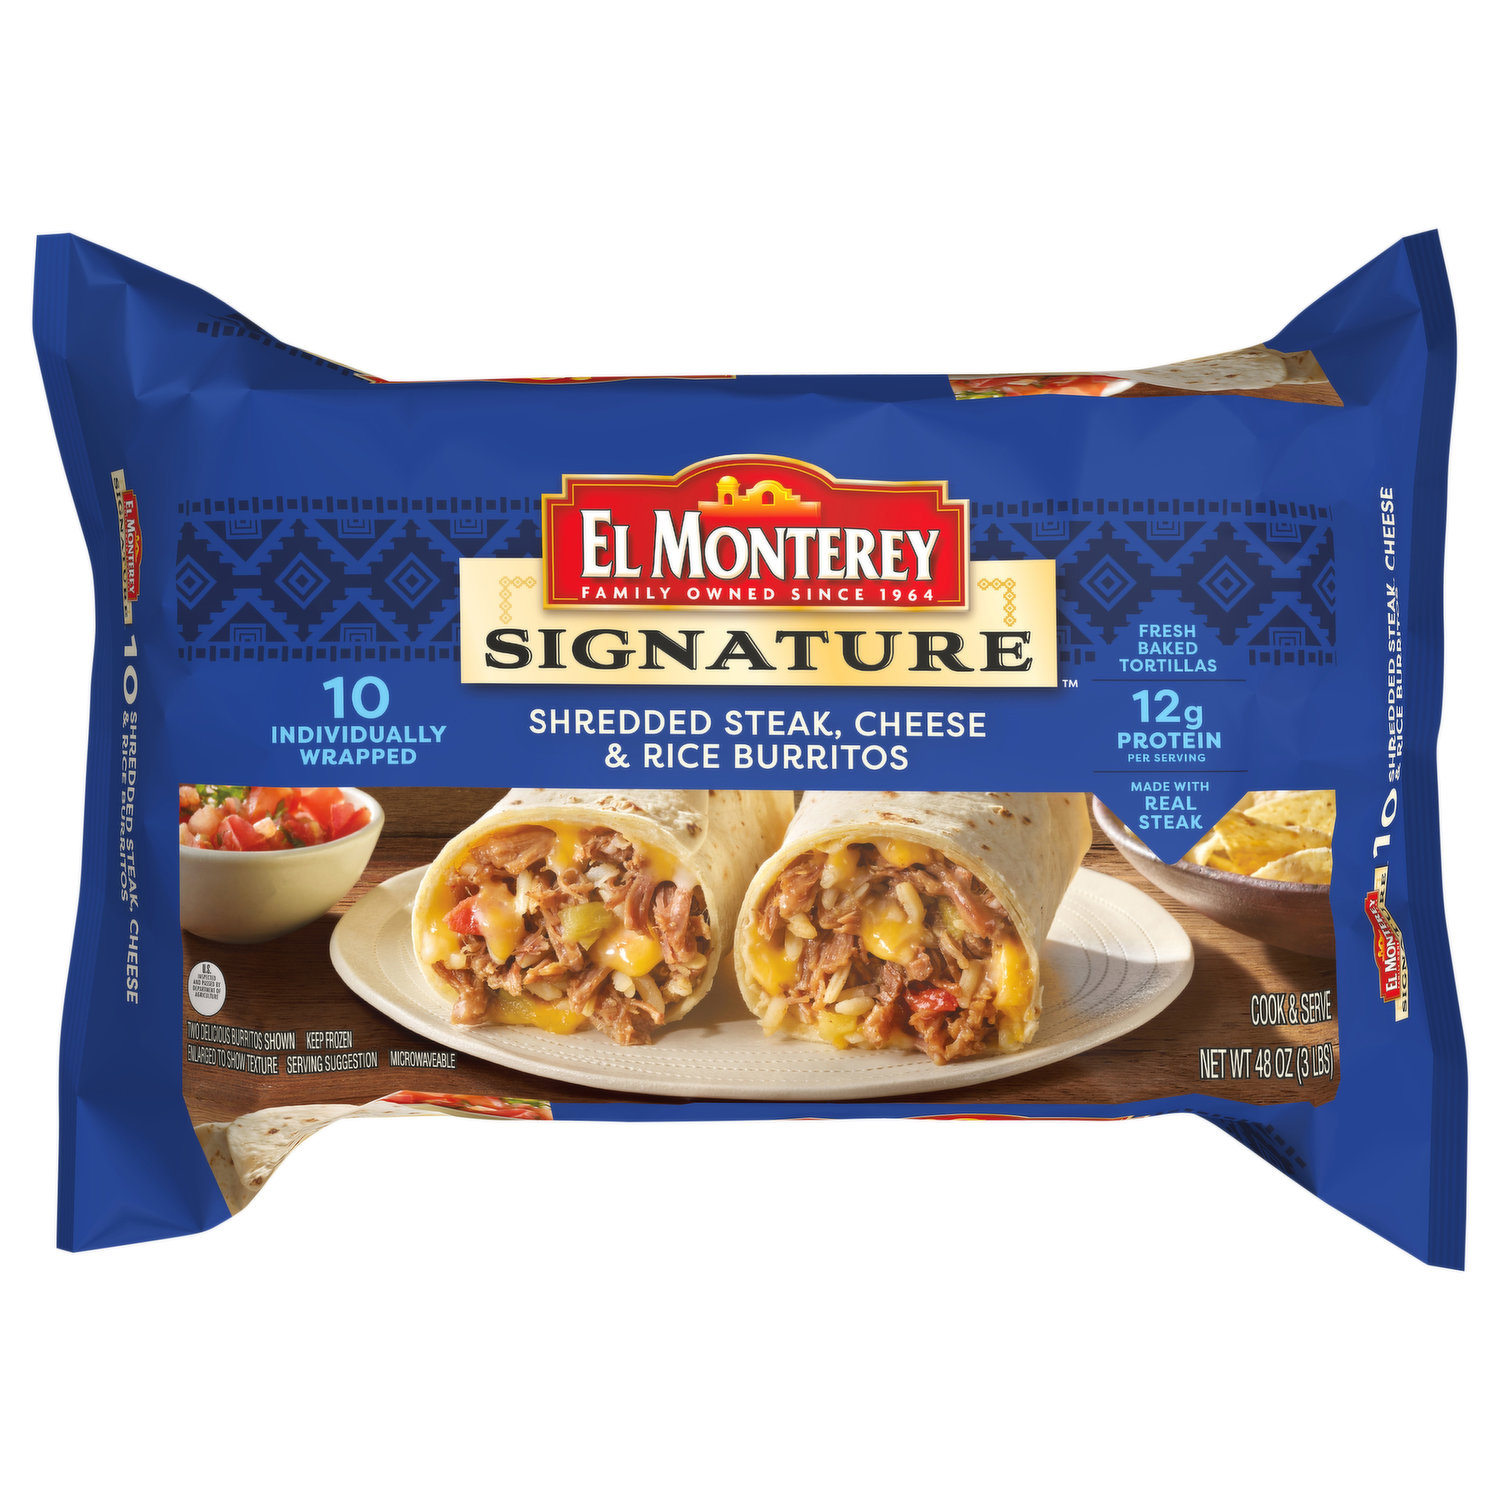 El Monterey Burritos, Shredded Steak, Cheese & Rice